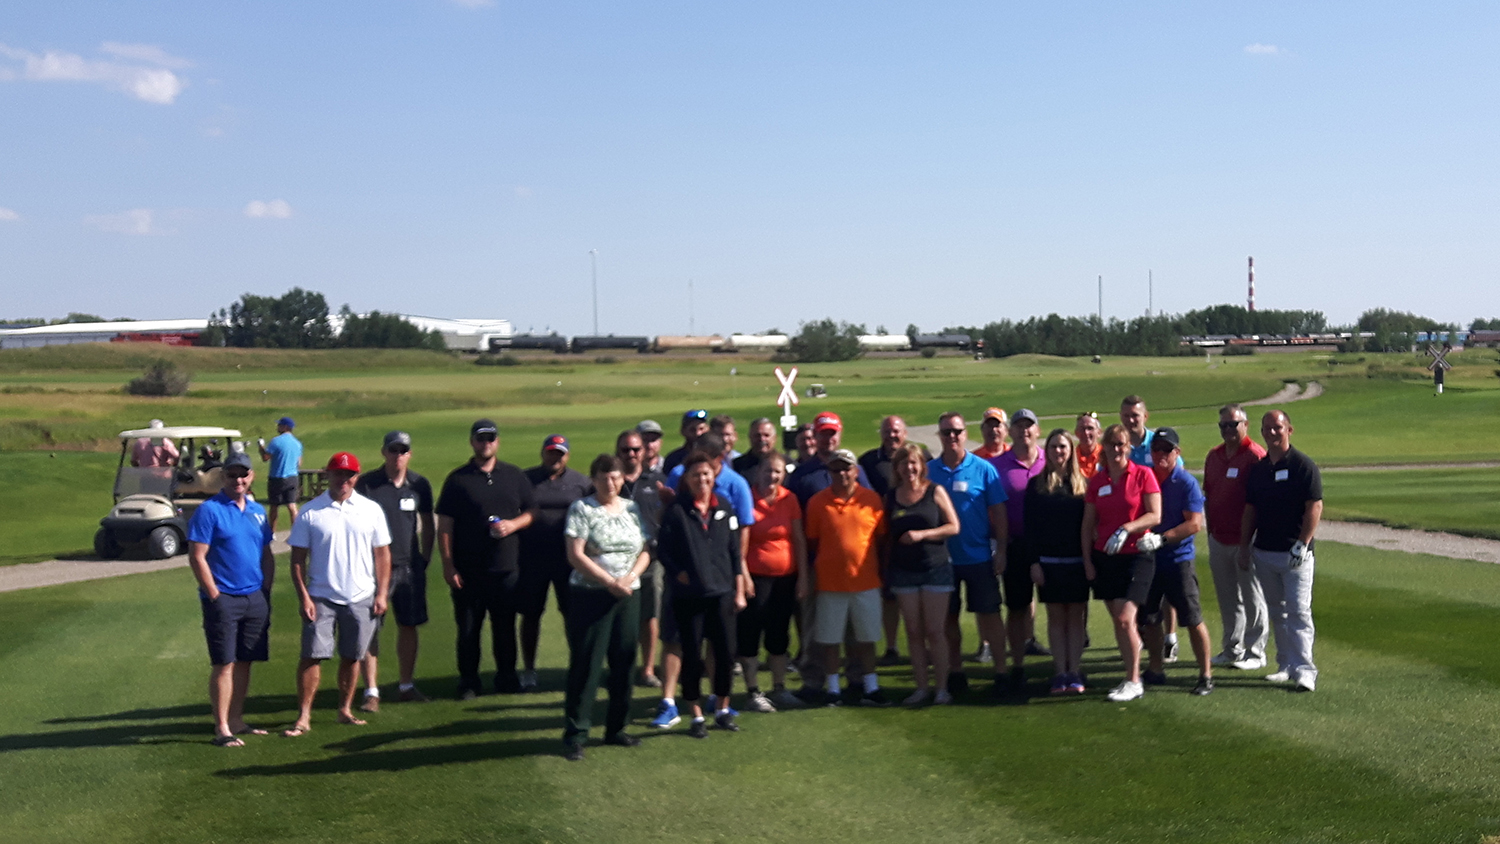 2017 Startec’s Employee Golf Event – 5th Annual John Anton Memorial